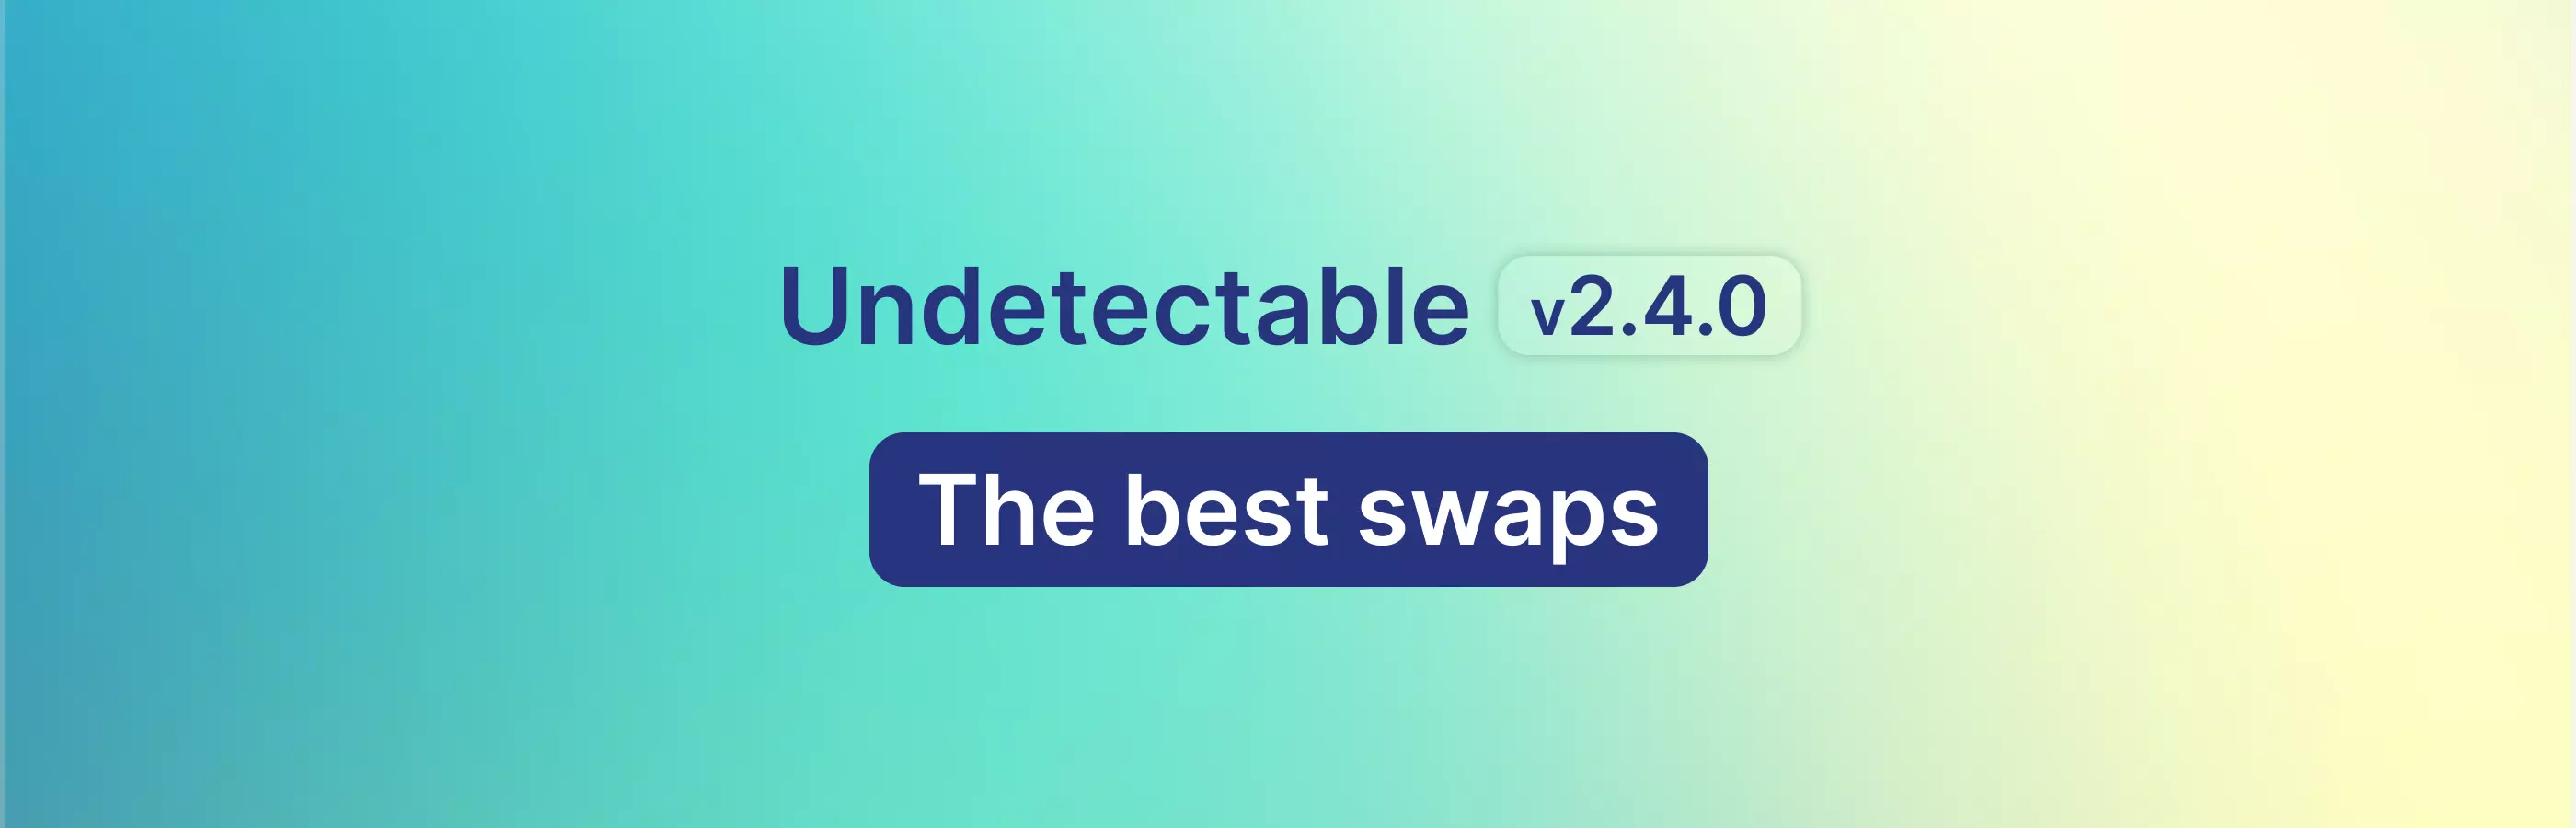 Cập nhật Undetectable 2.4.0 - Các thay đổi tốt nhất